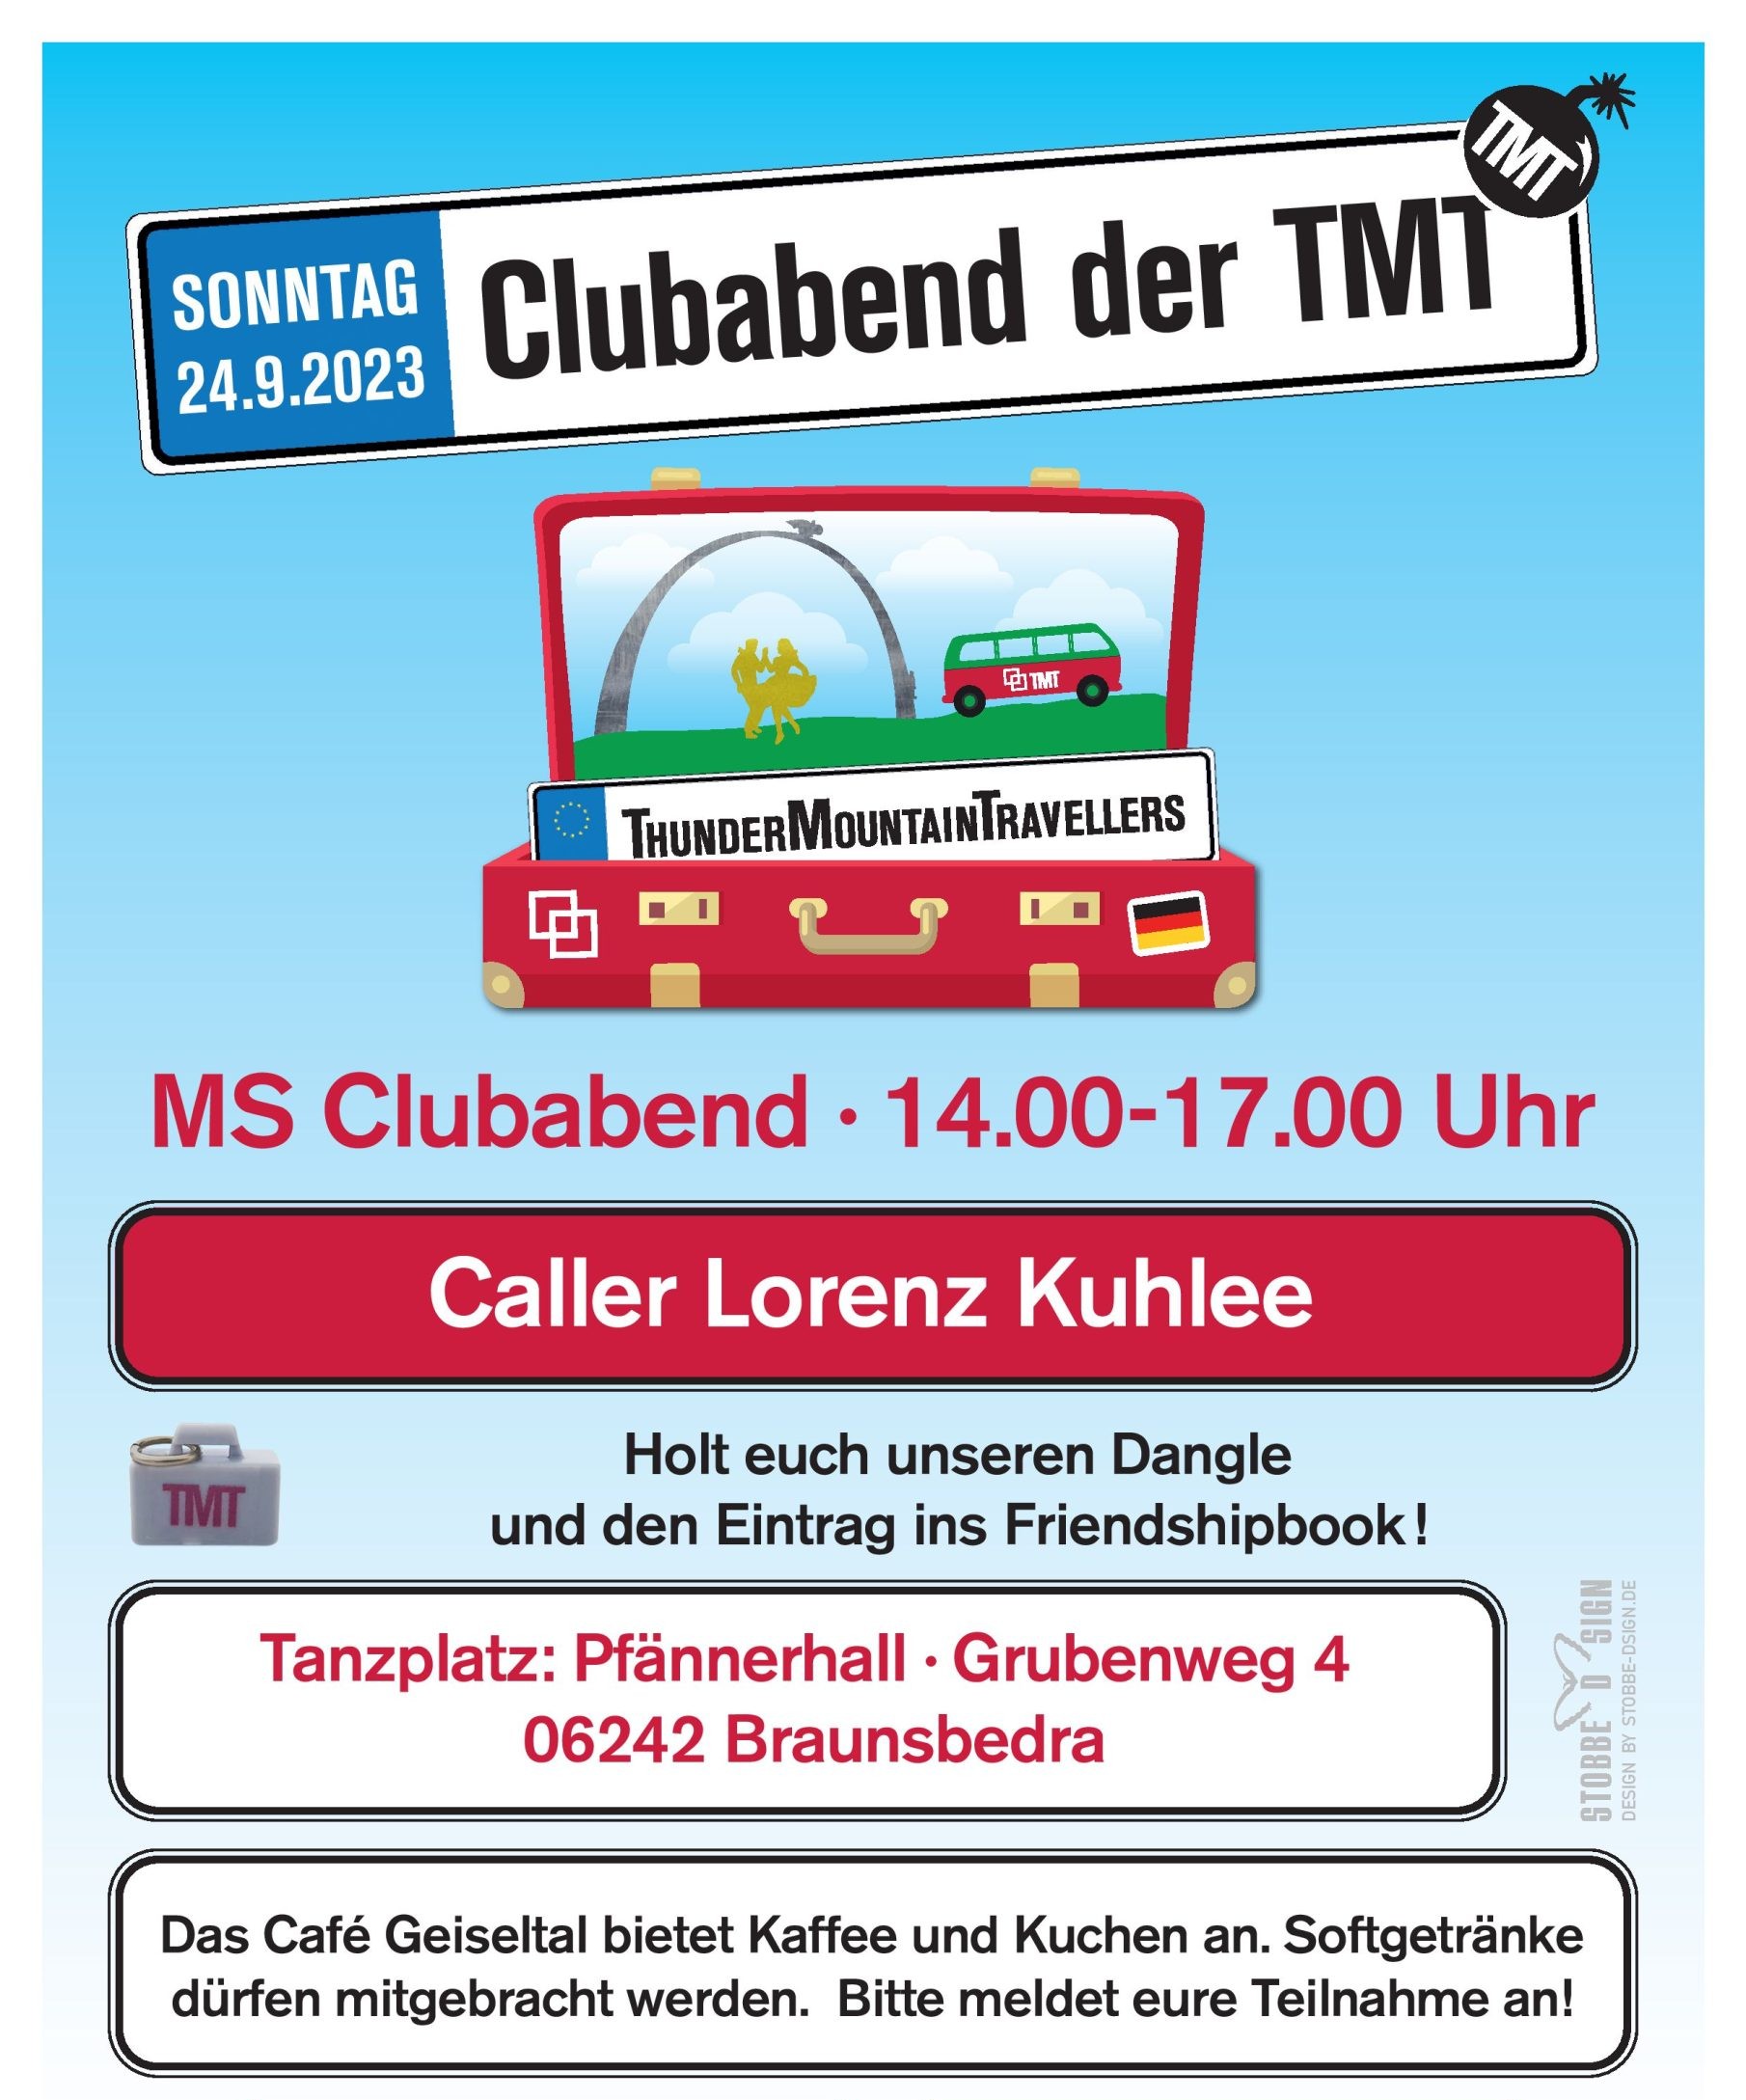 TMT Clubabend Braunsbedra Flyer scaled